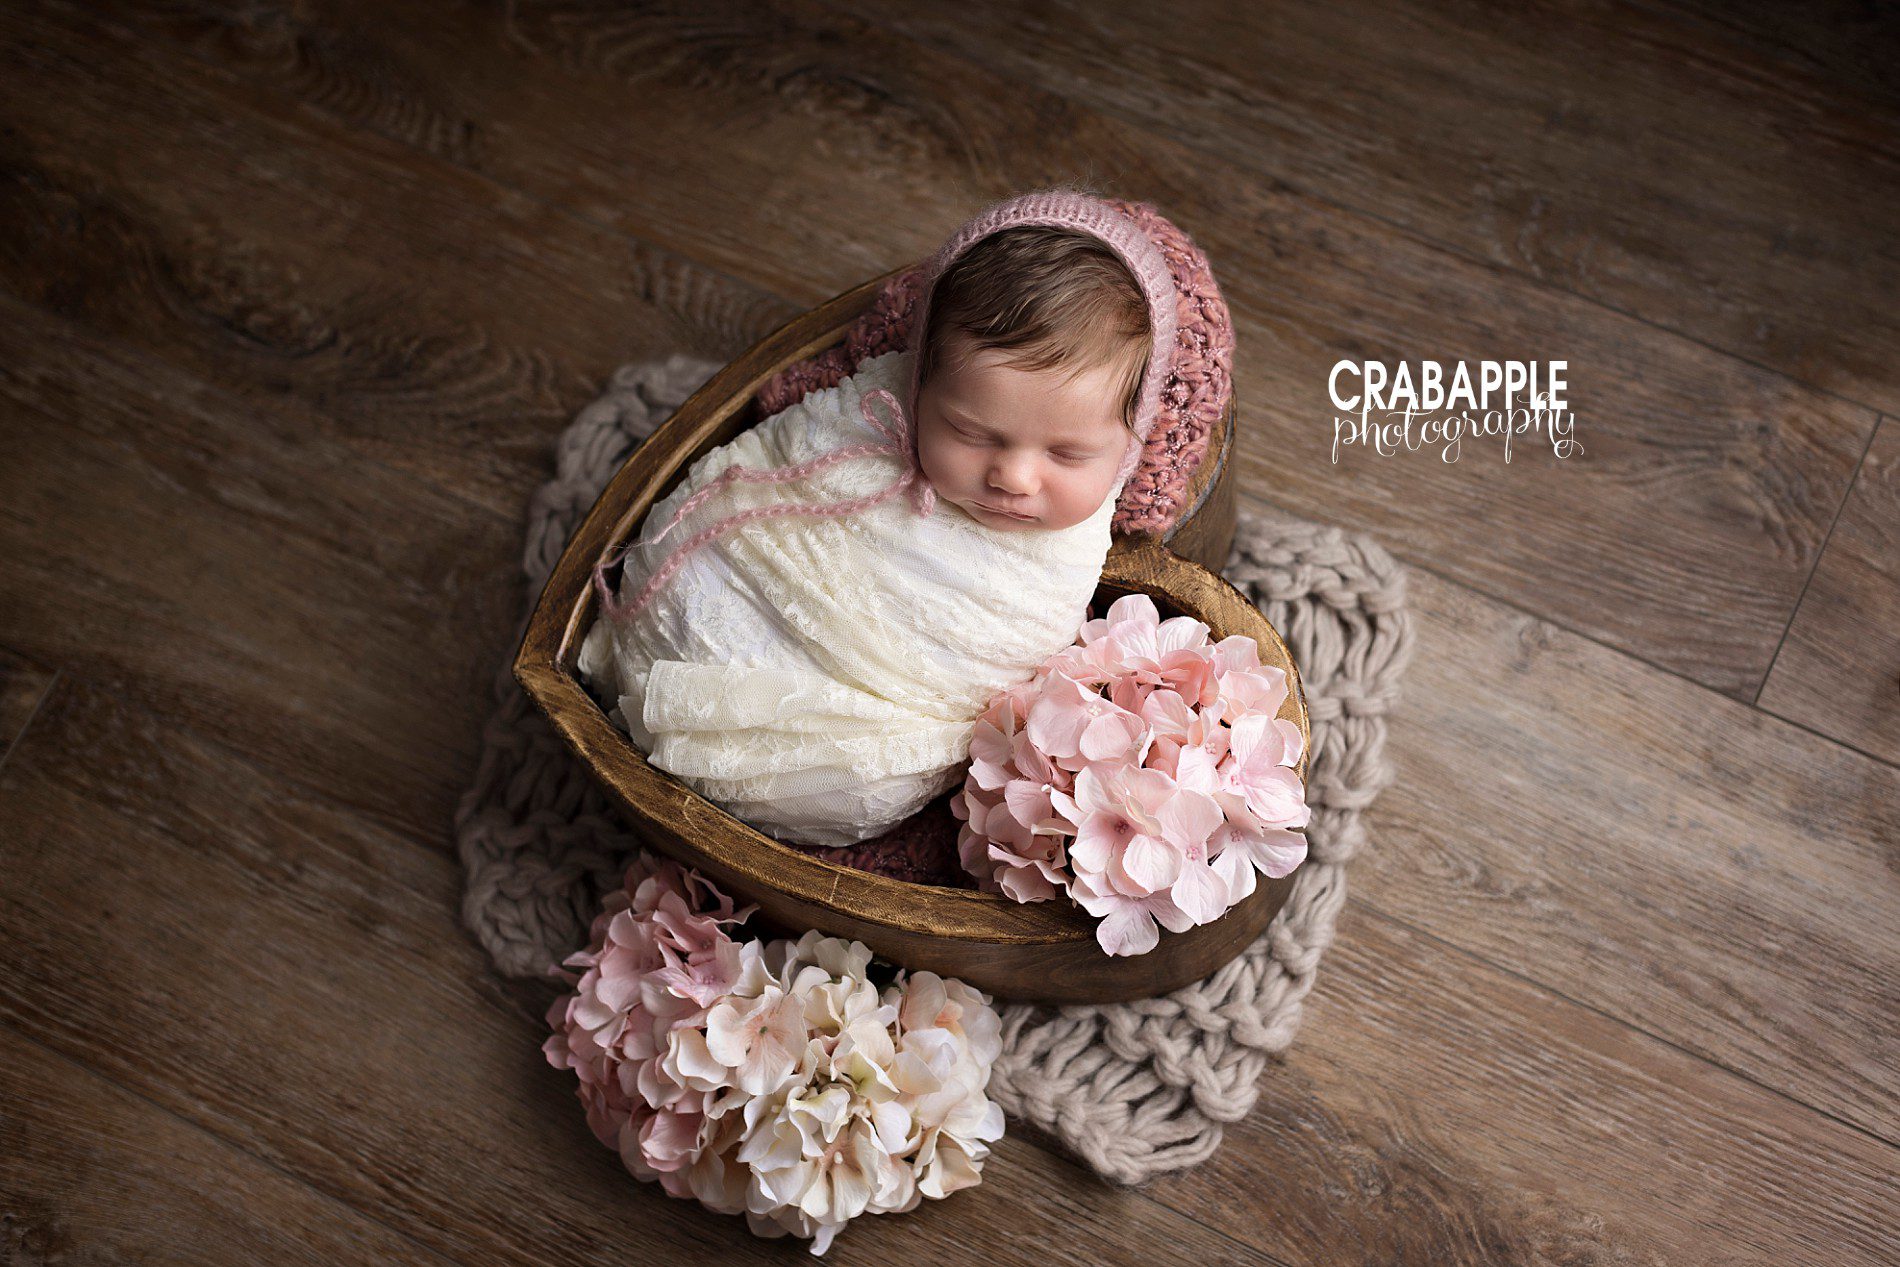 using flowers in newborn photos